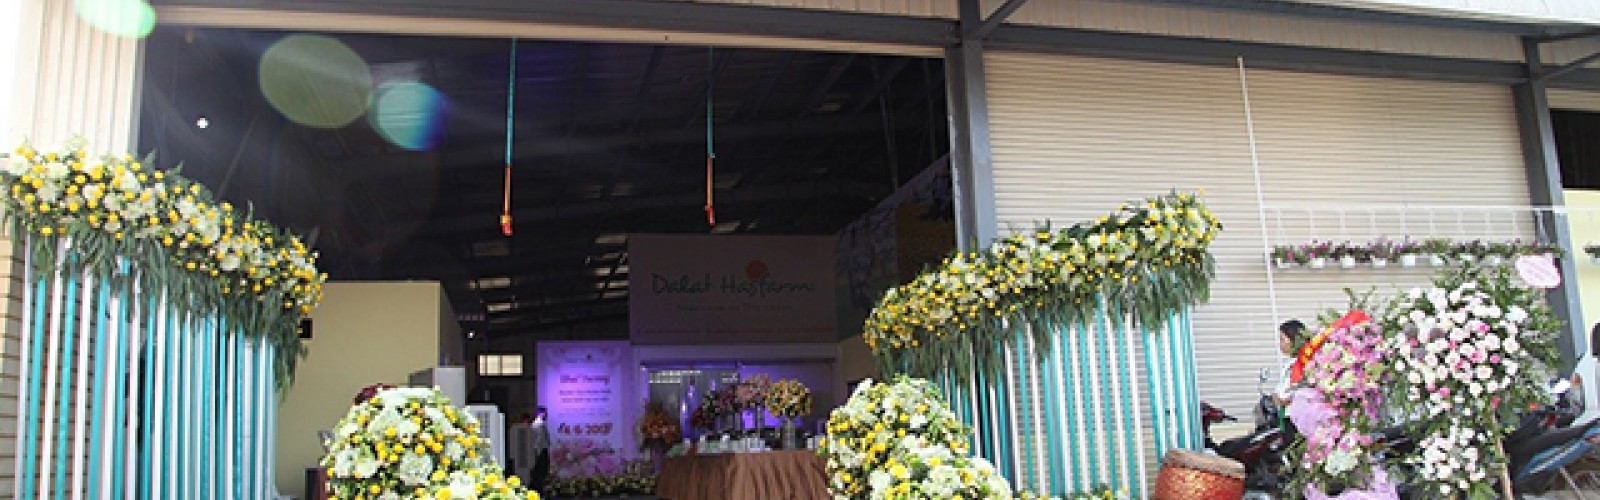 Dalat Hasfarm relocating its distribution center at Long Biên District, Ha Noi City